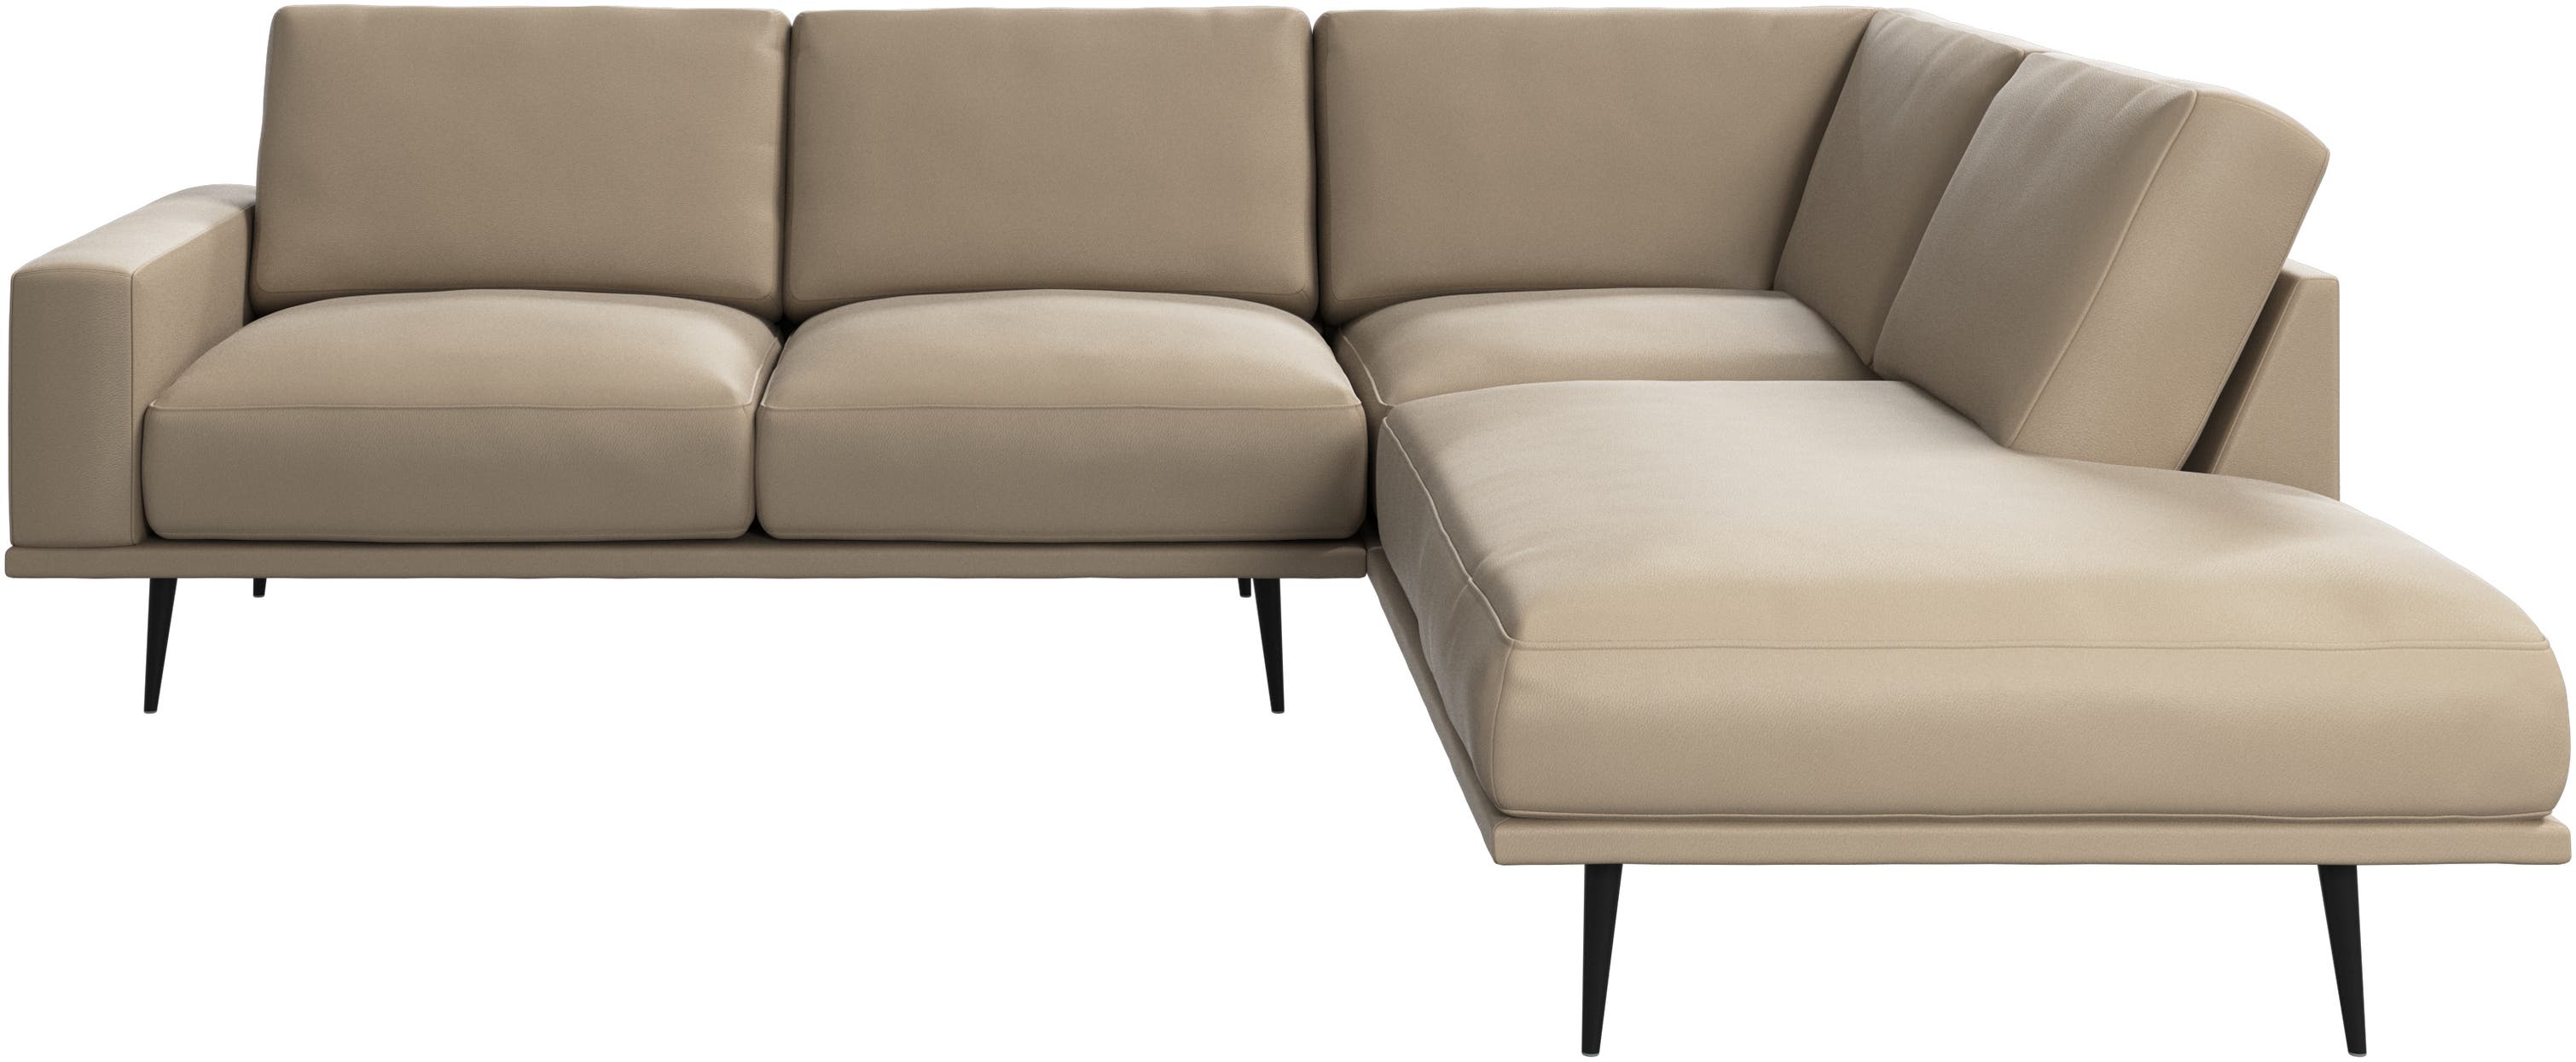 Carlton sofa with lounging units